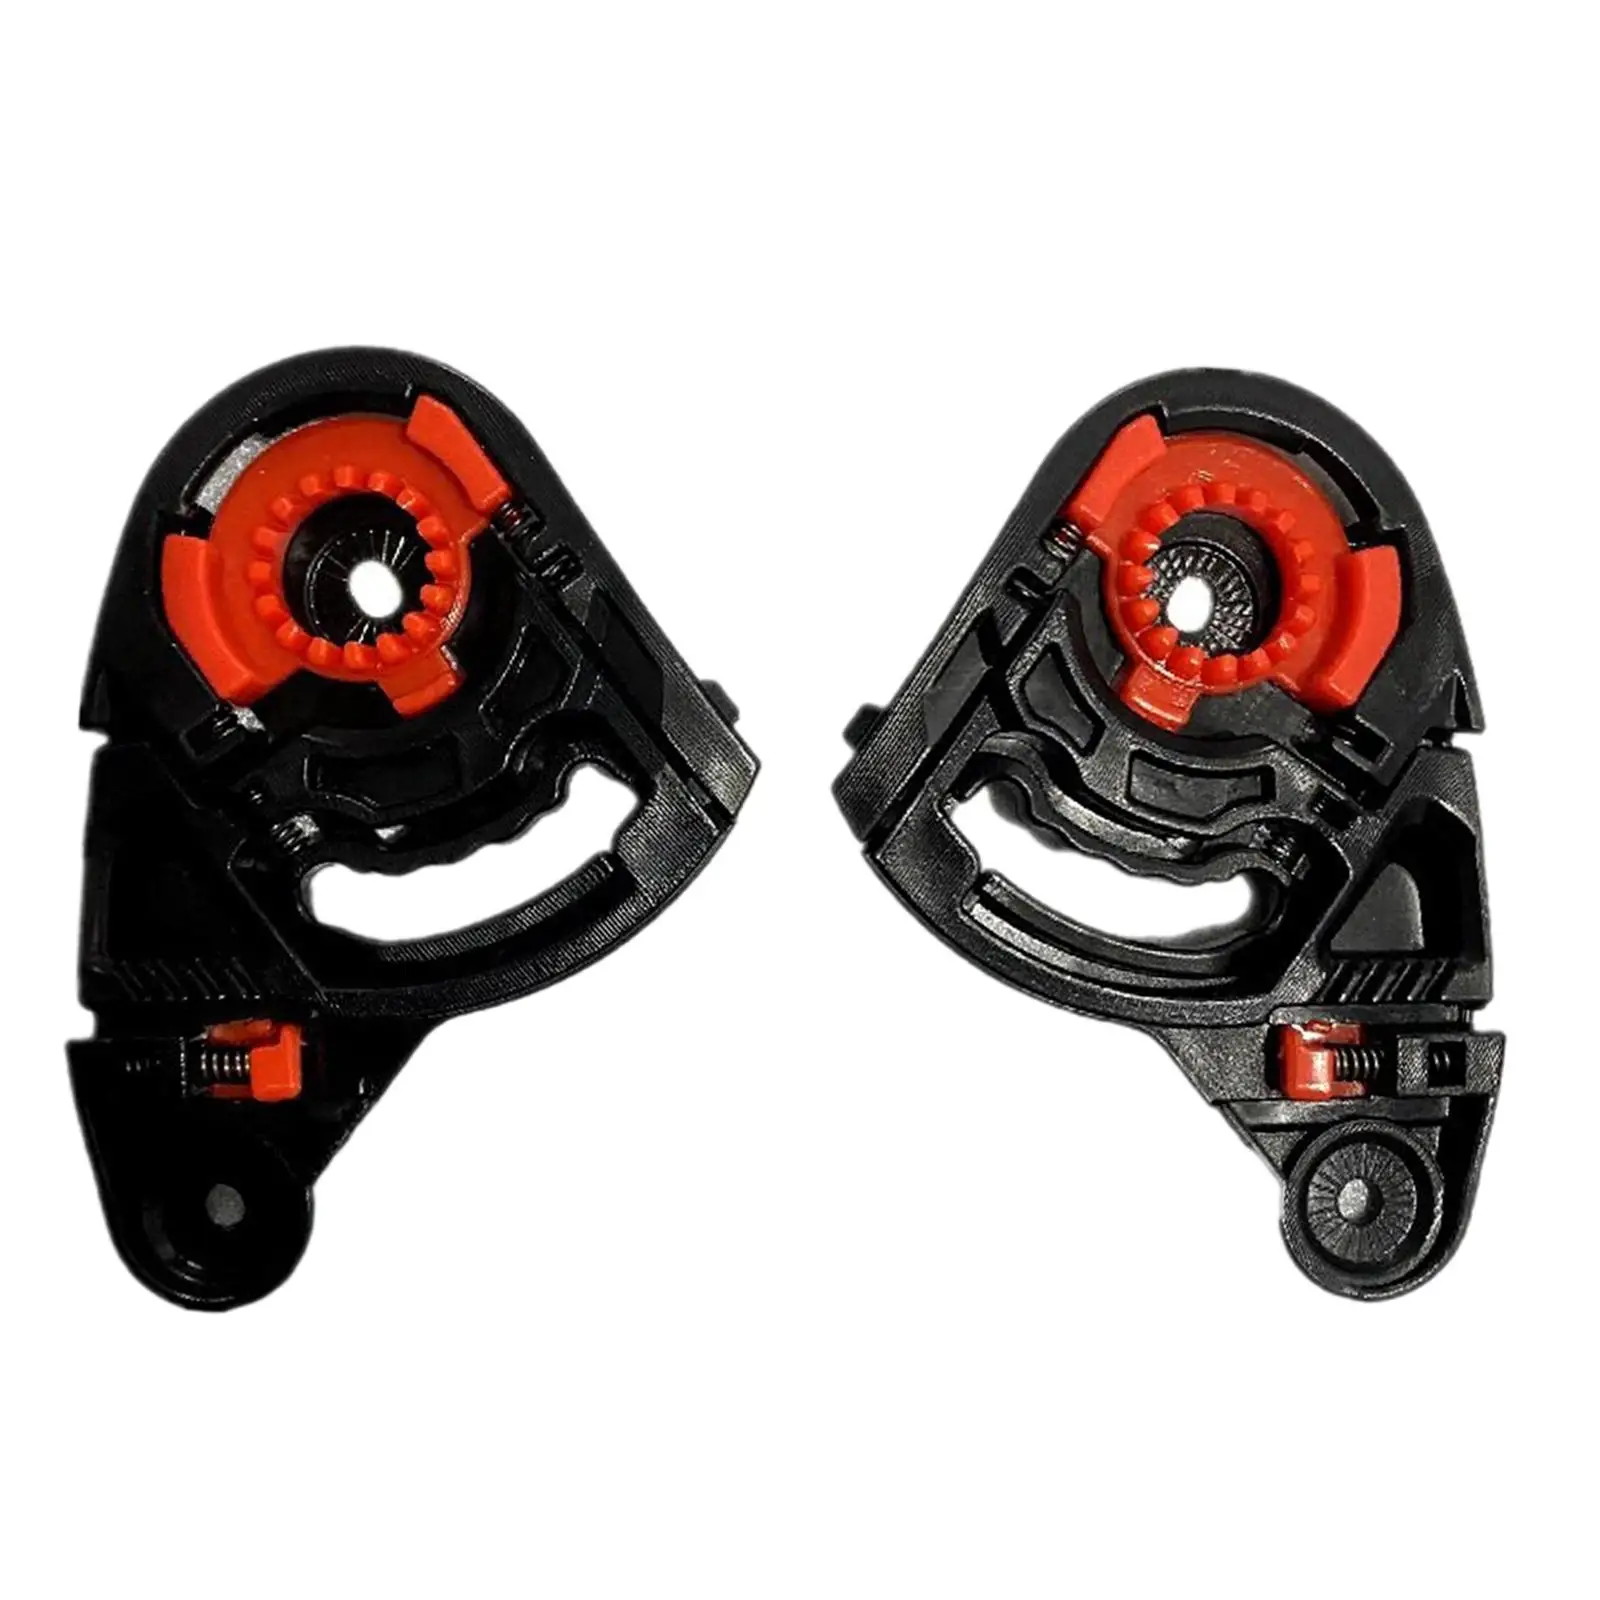 Helmet Gear Plate/Ratchet Set Shield Durable Practical Visor Gear Base Fit for MT Blade2 Revenge2 Rapide Motorcycle